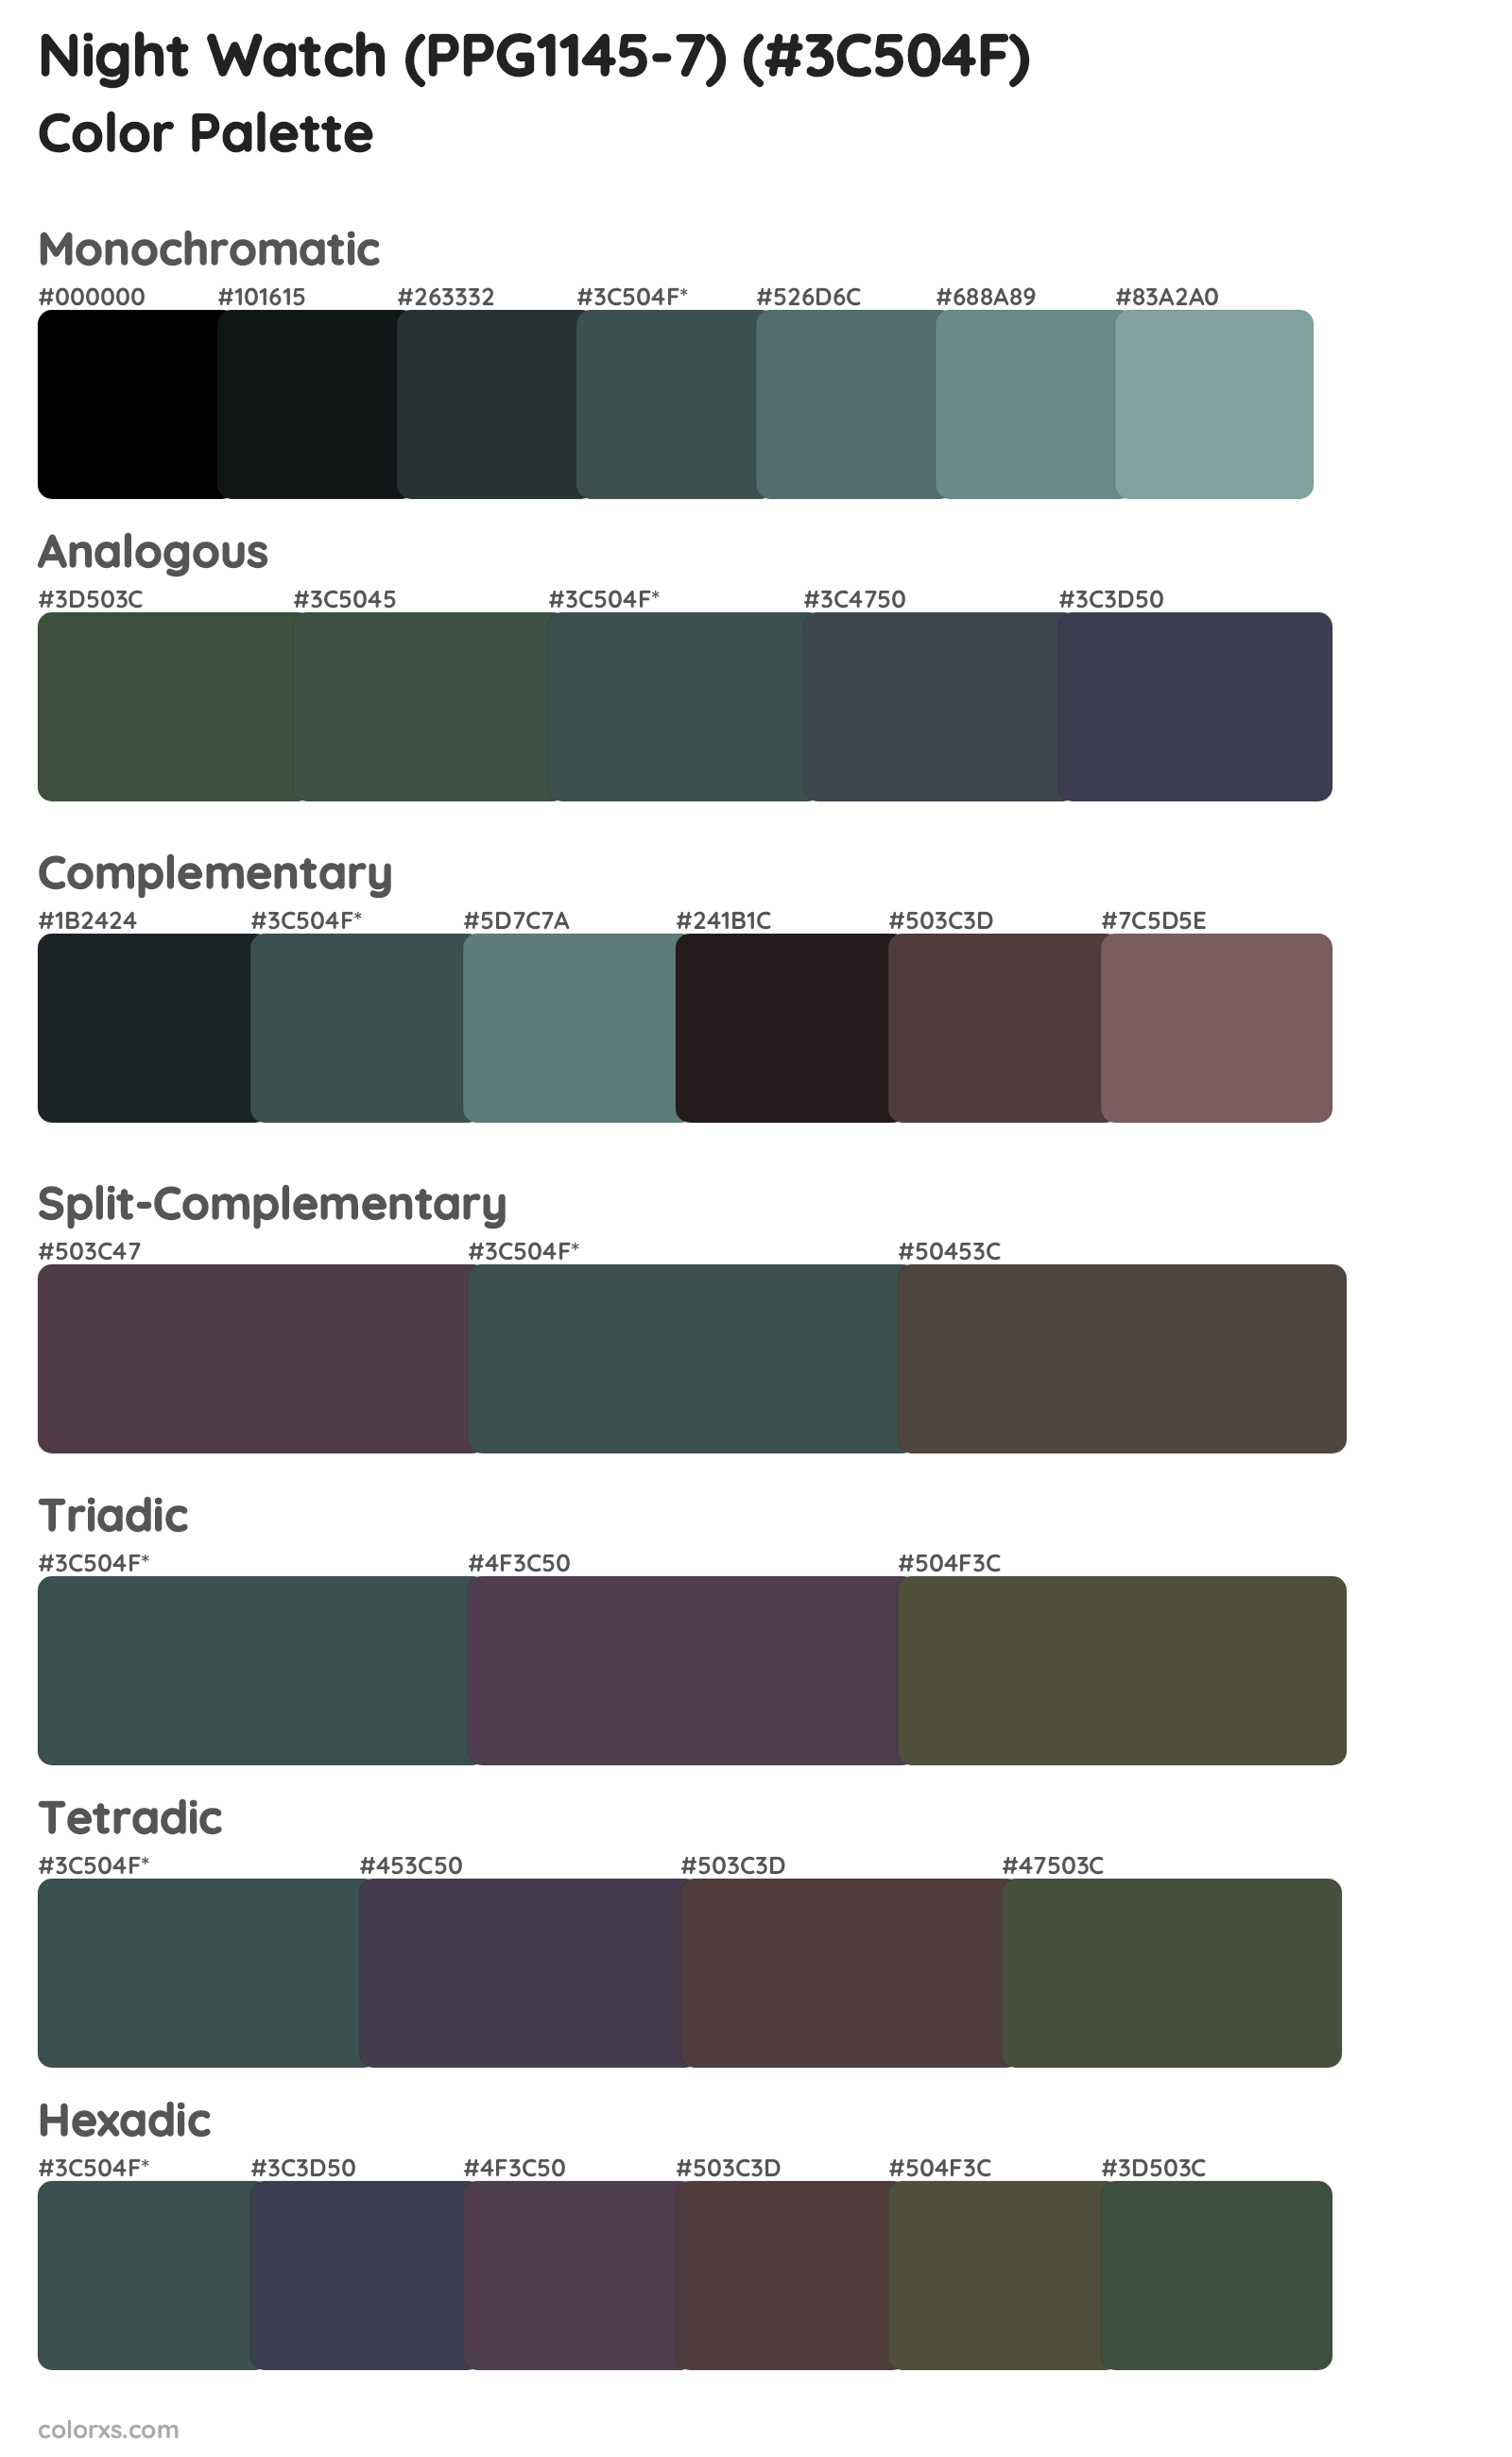 Night Watch (PPG1145-7) Color Scheme Palettes